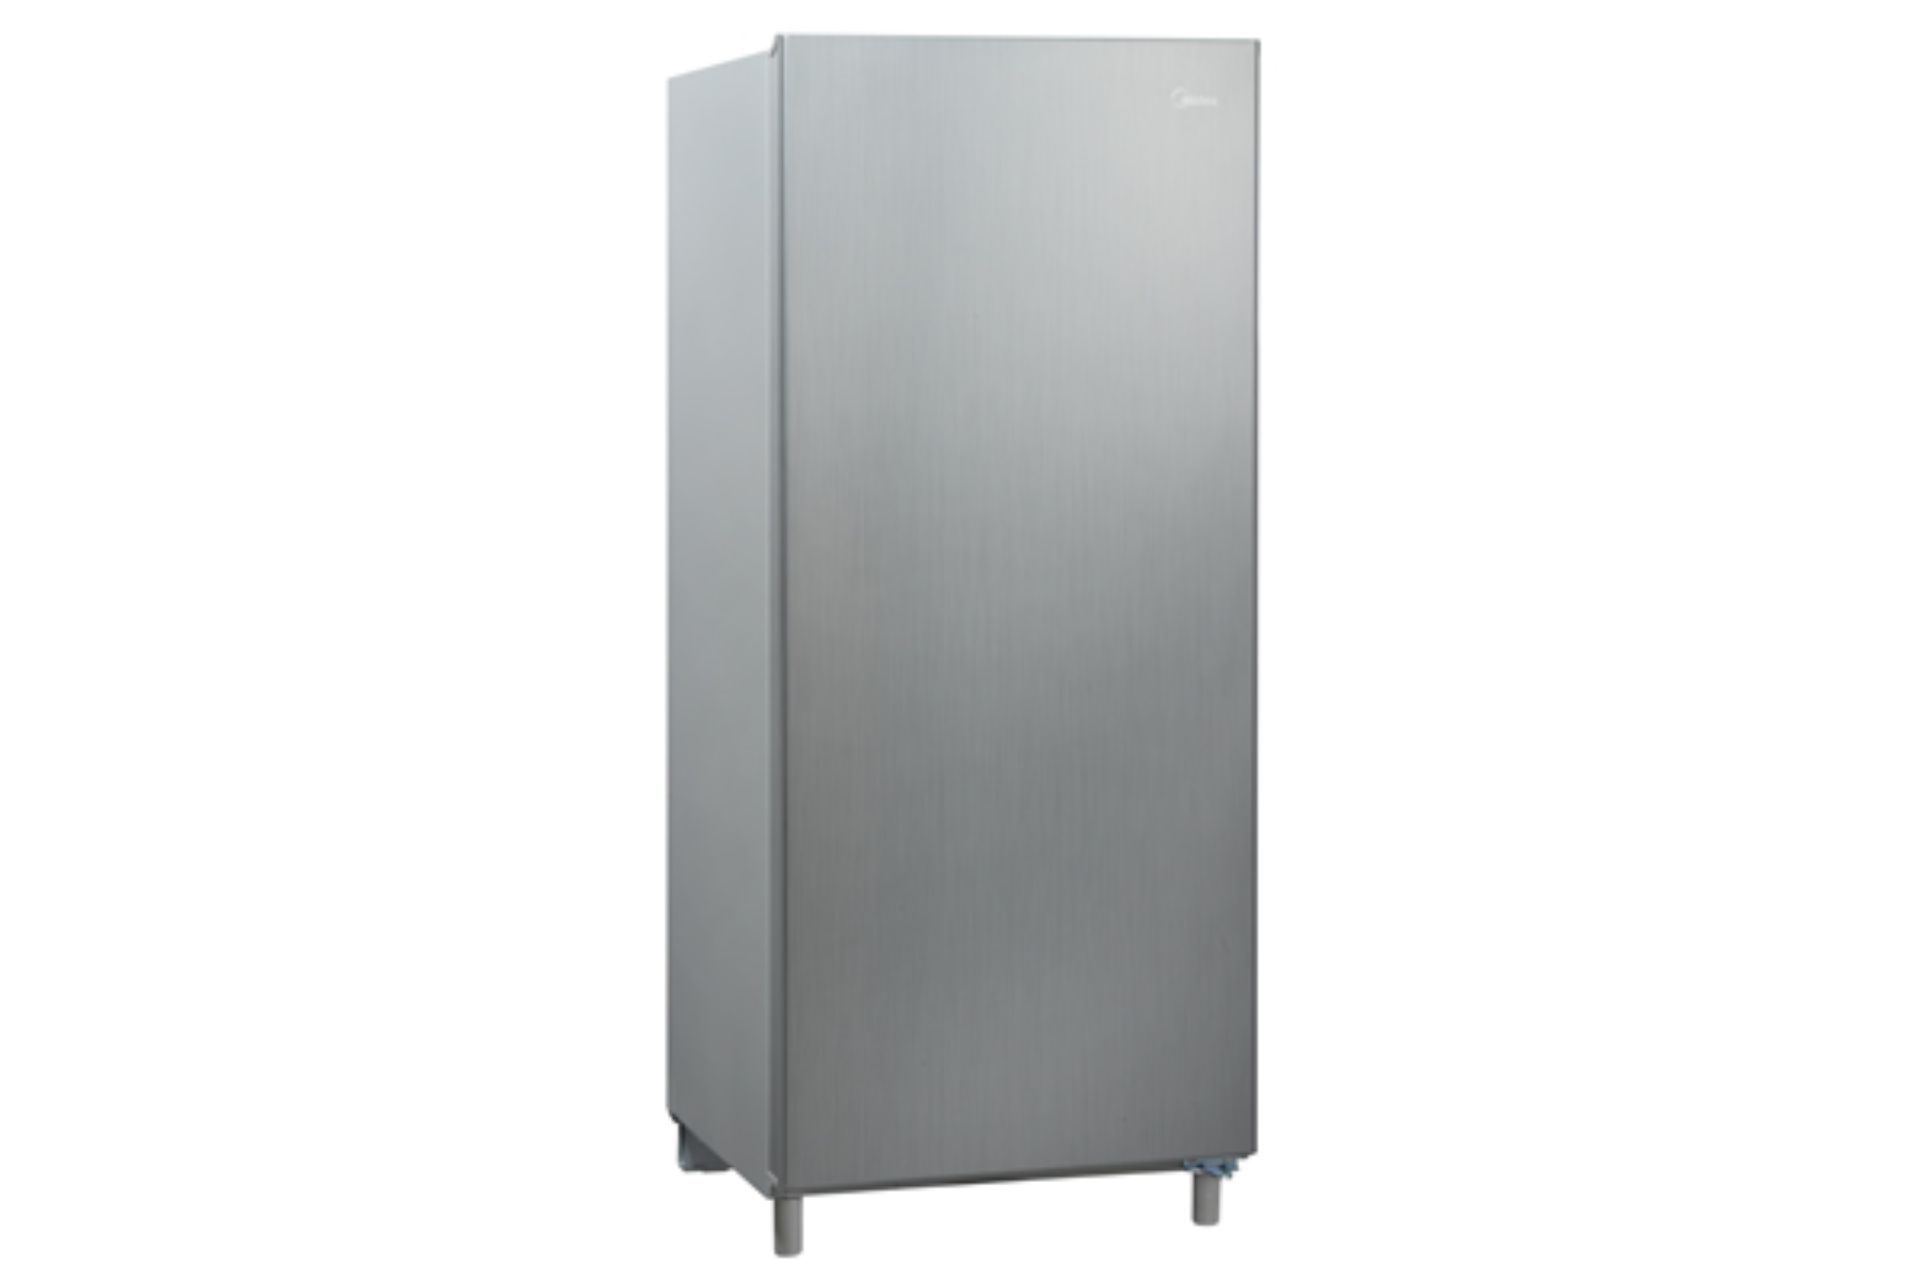 156L 1-Door Refrigerator